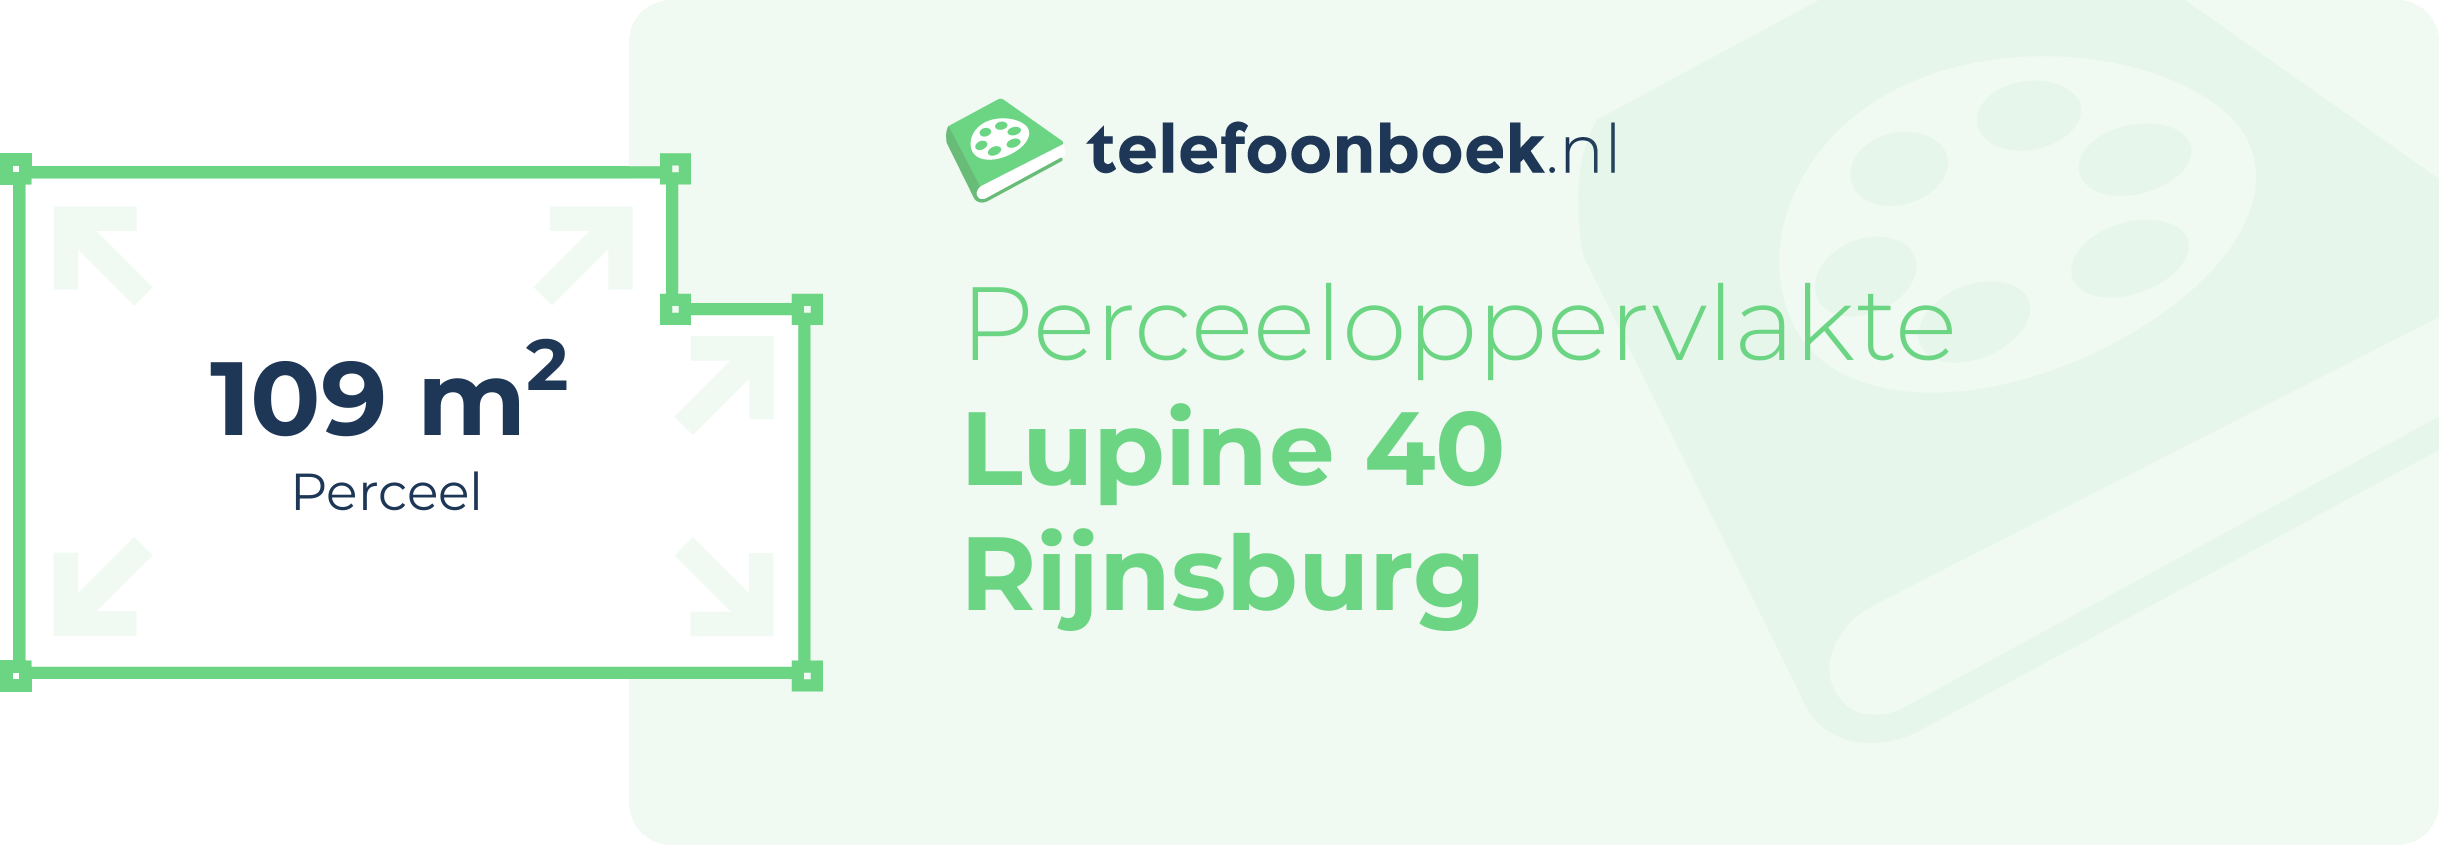 Perceeloppervlakte Lupine 40 Rijnsburg